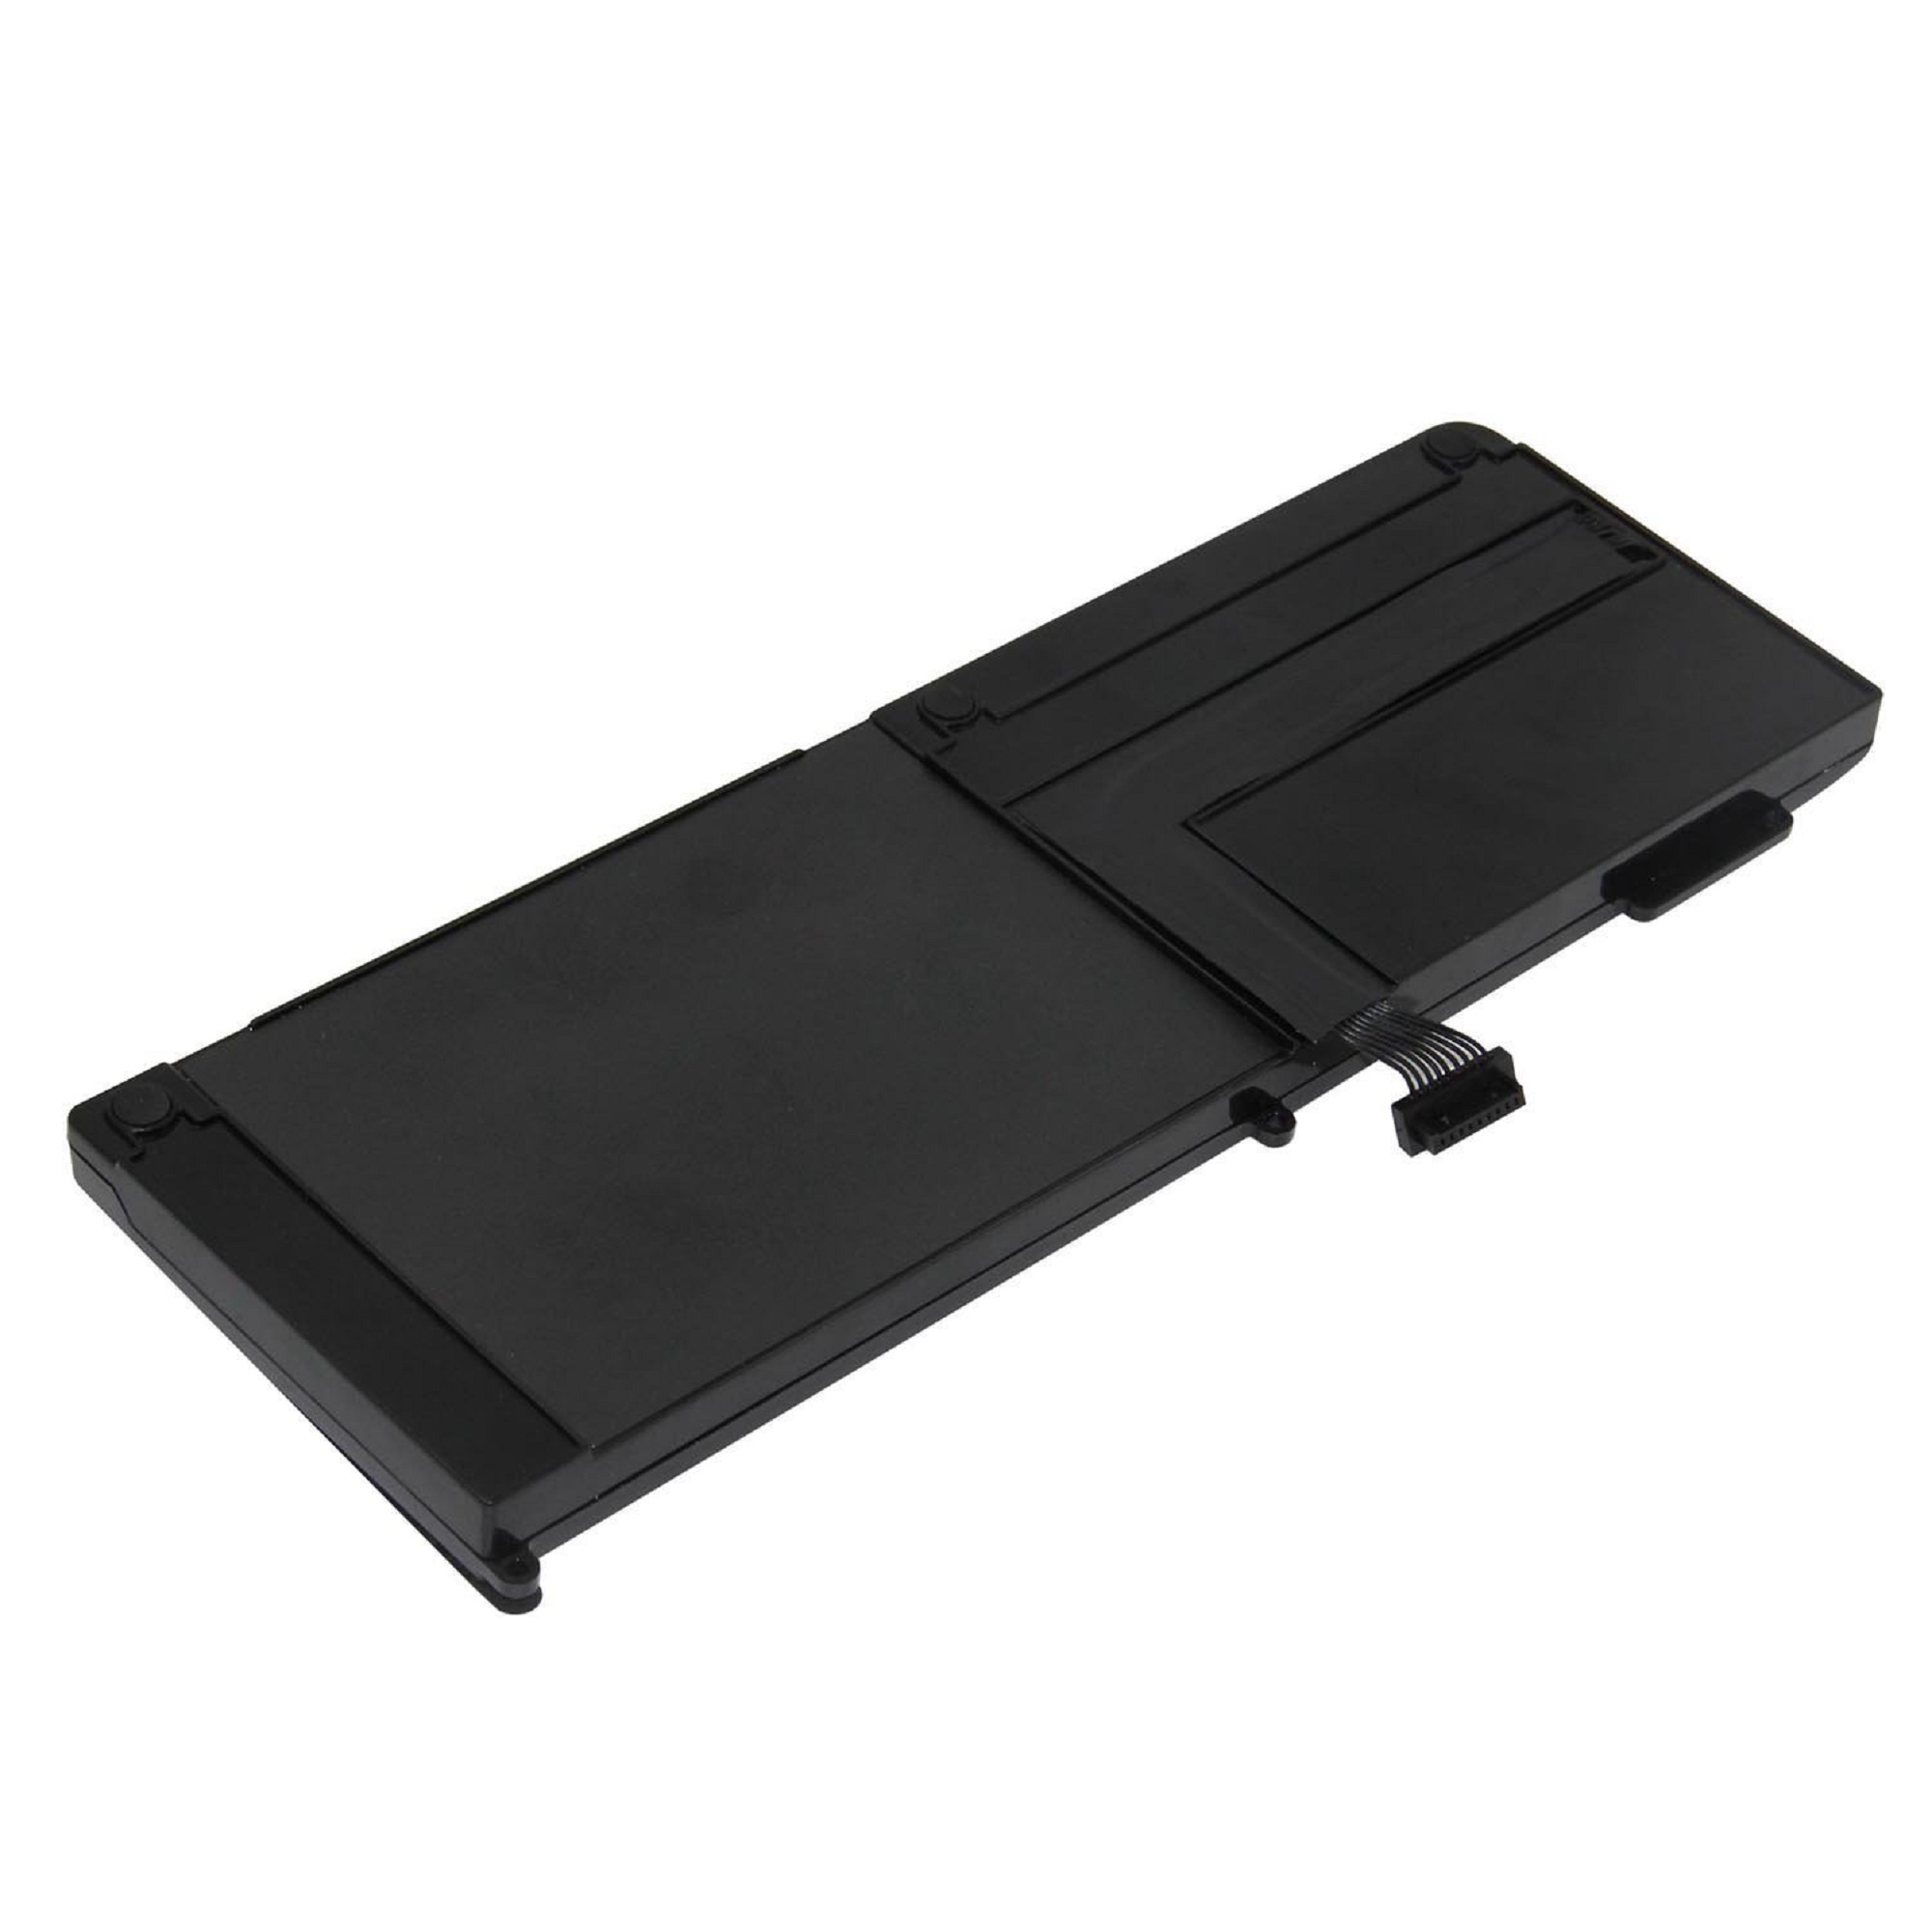 Best Seller OEM Manufacturer laptop battery lithium ion batteries A1321 for APPLE MacBooK Pro 15 A1286 A1382 A1321 MC721 MC371